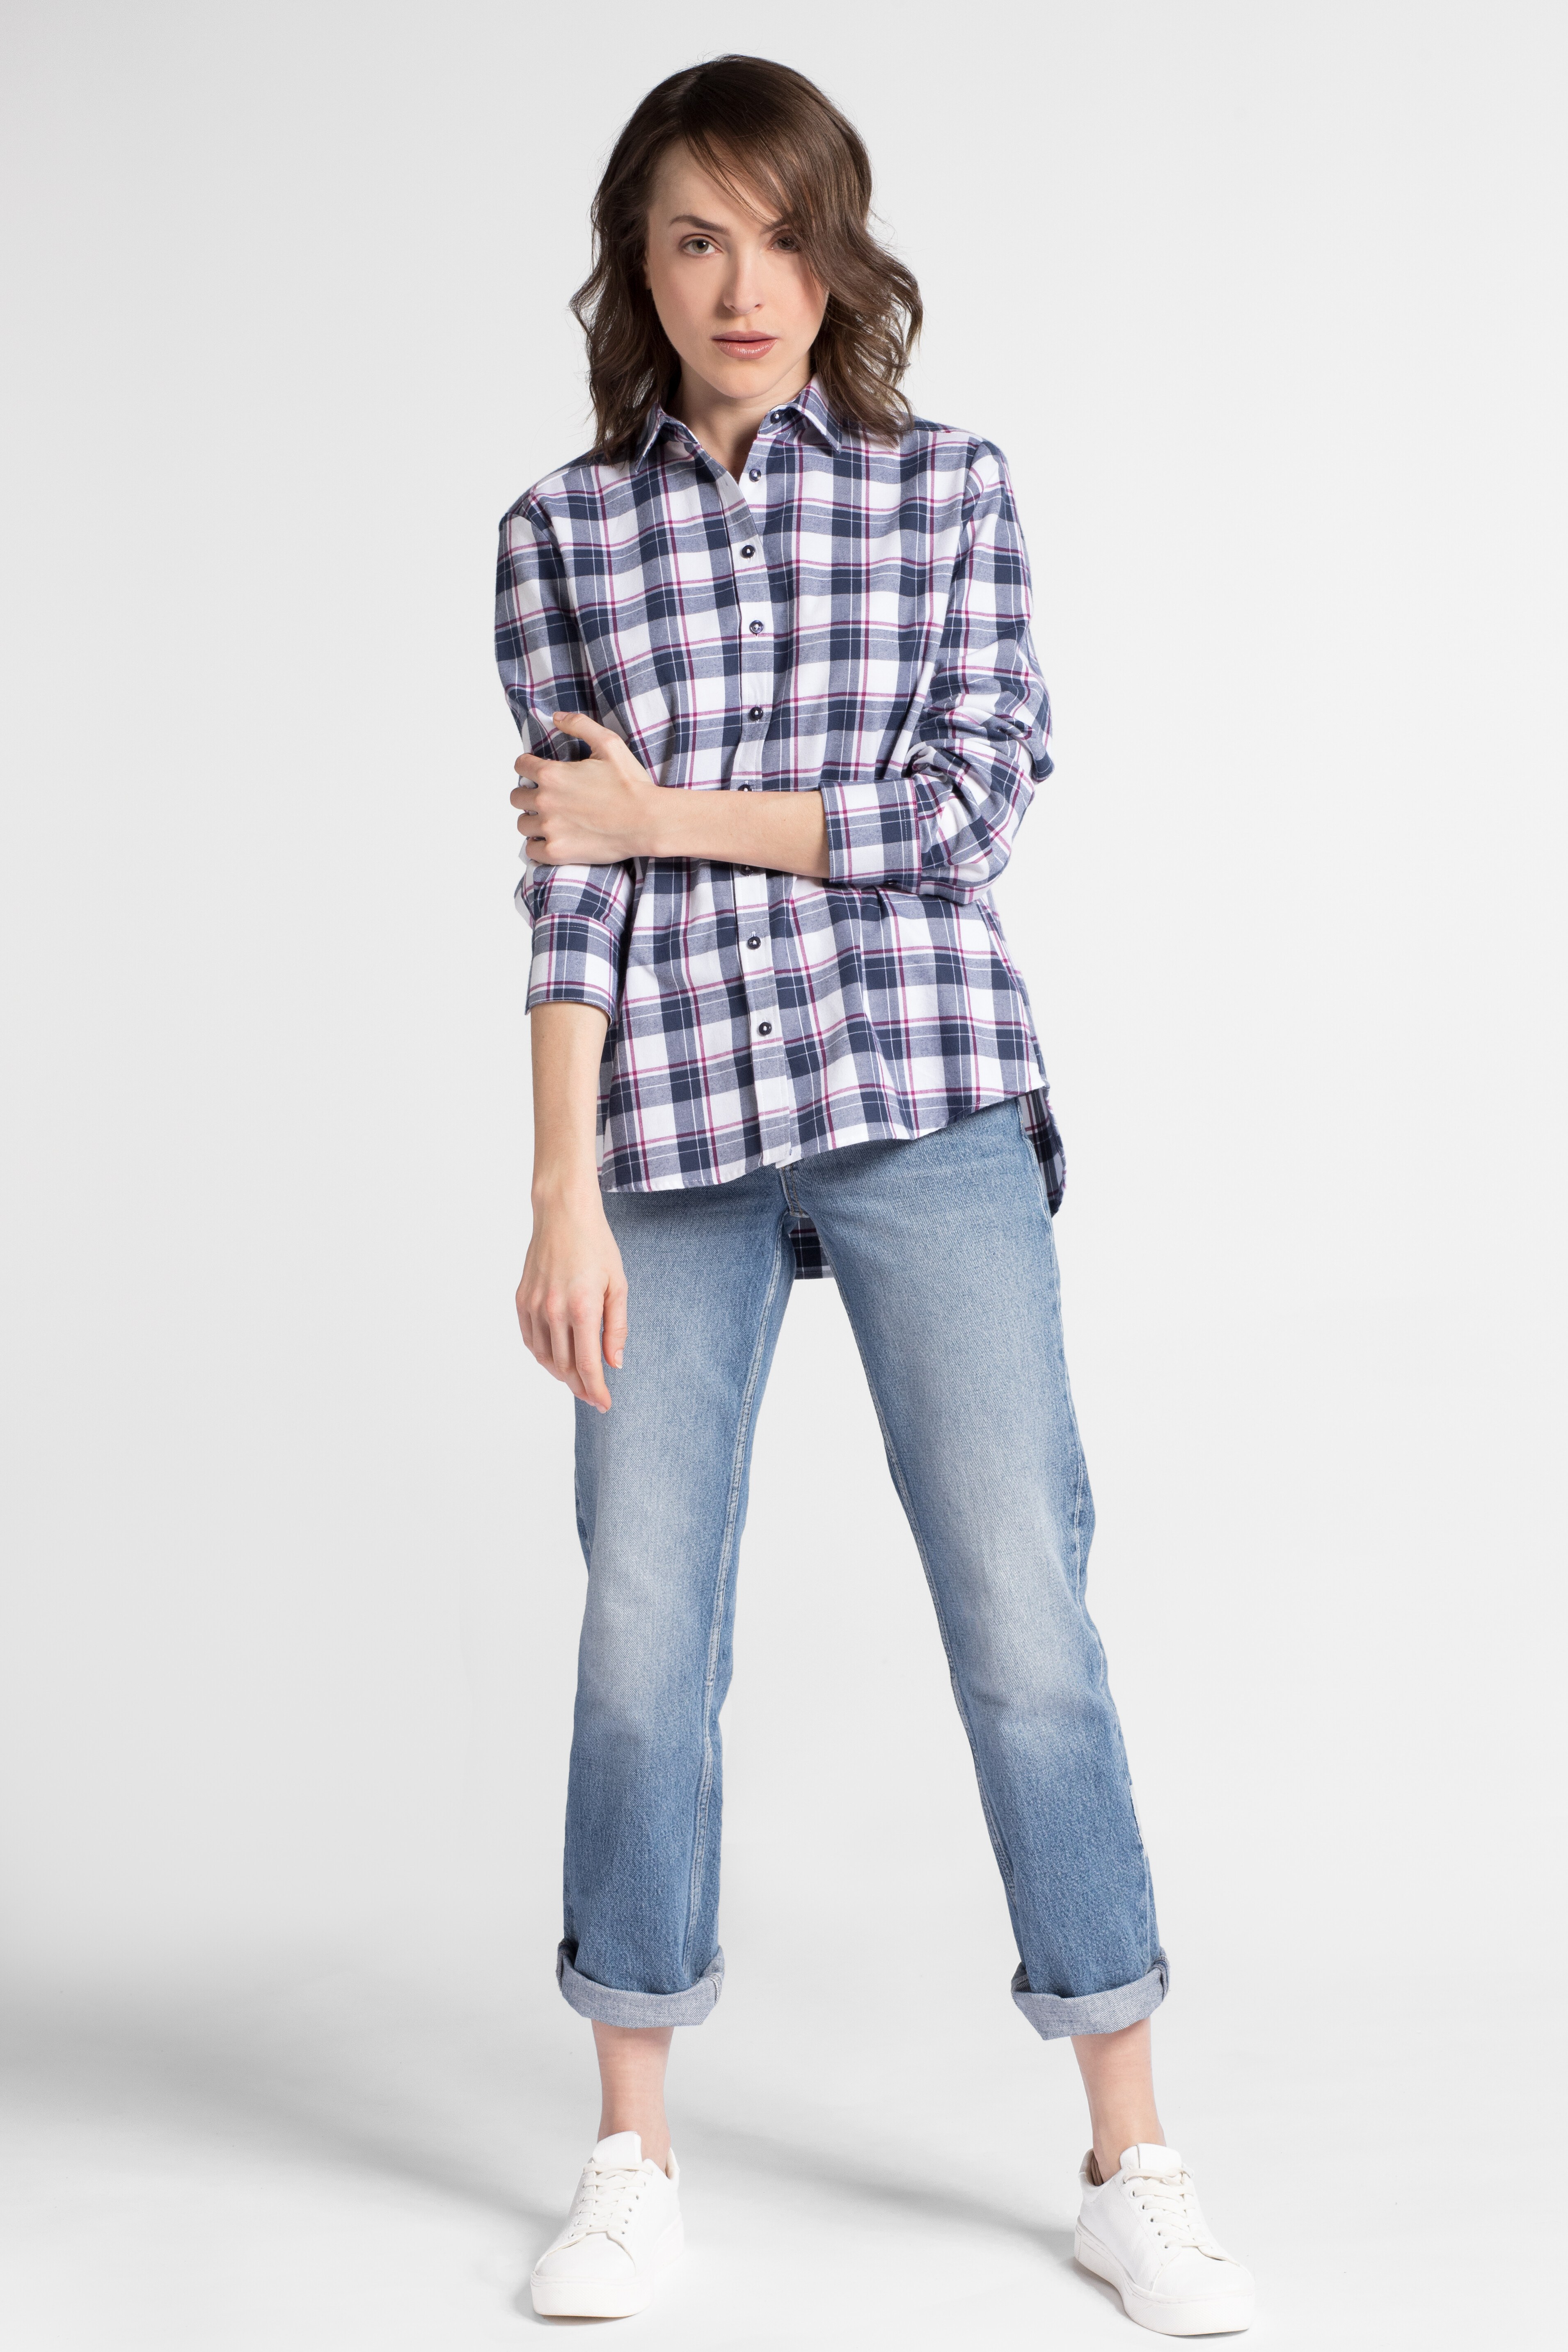 Langarm MODERN 6268 | ETERNA blau-weiß Bluse Eterna | D614.19 Fit Modern kariert | Bekleidung Blusen | Jeans-Manufaktur | Flannel Damen CLASSIC